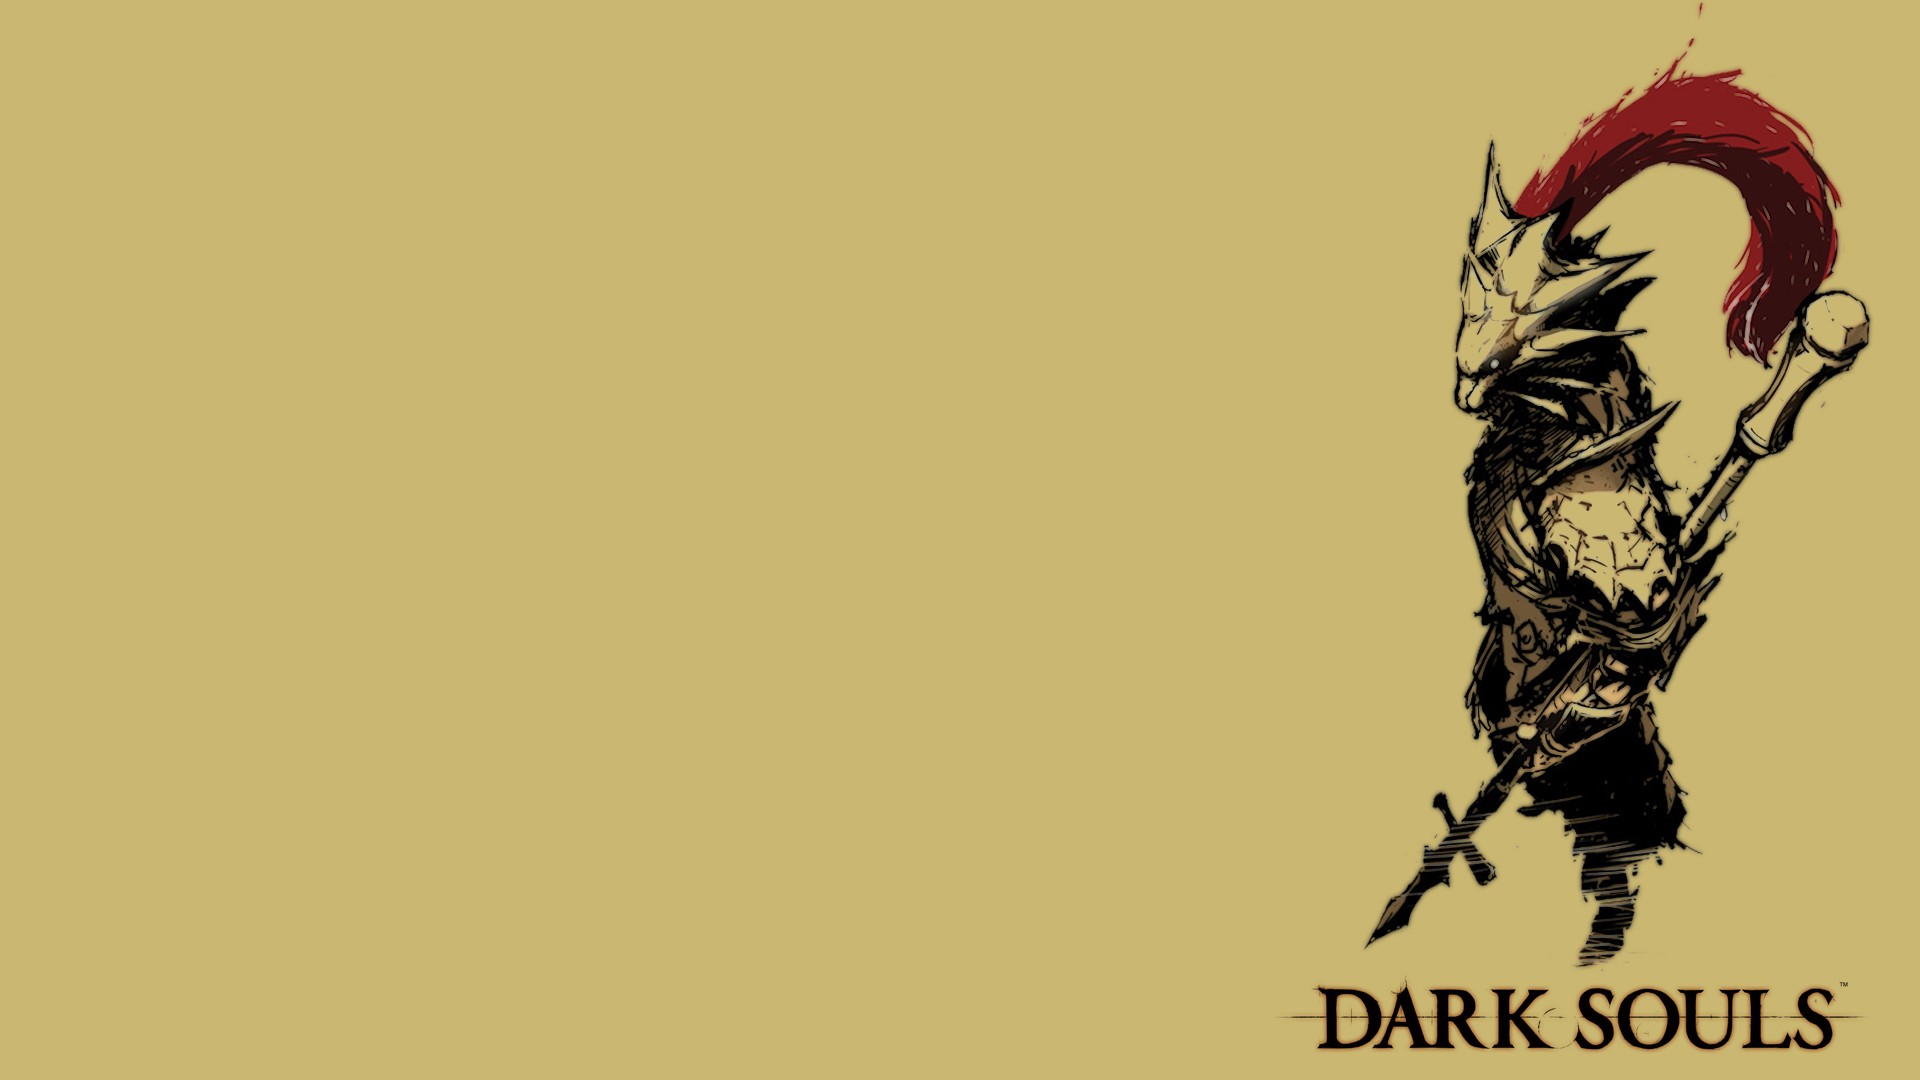 General 1920x1080 Dark Souls minimalism video games simple background DeviantArt fantasy art video game art